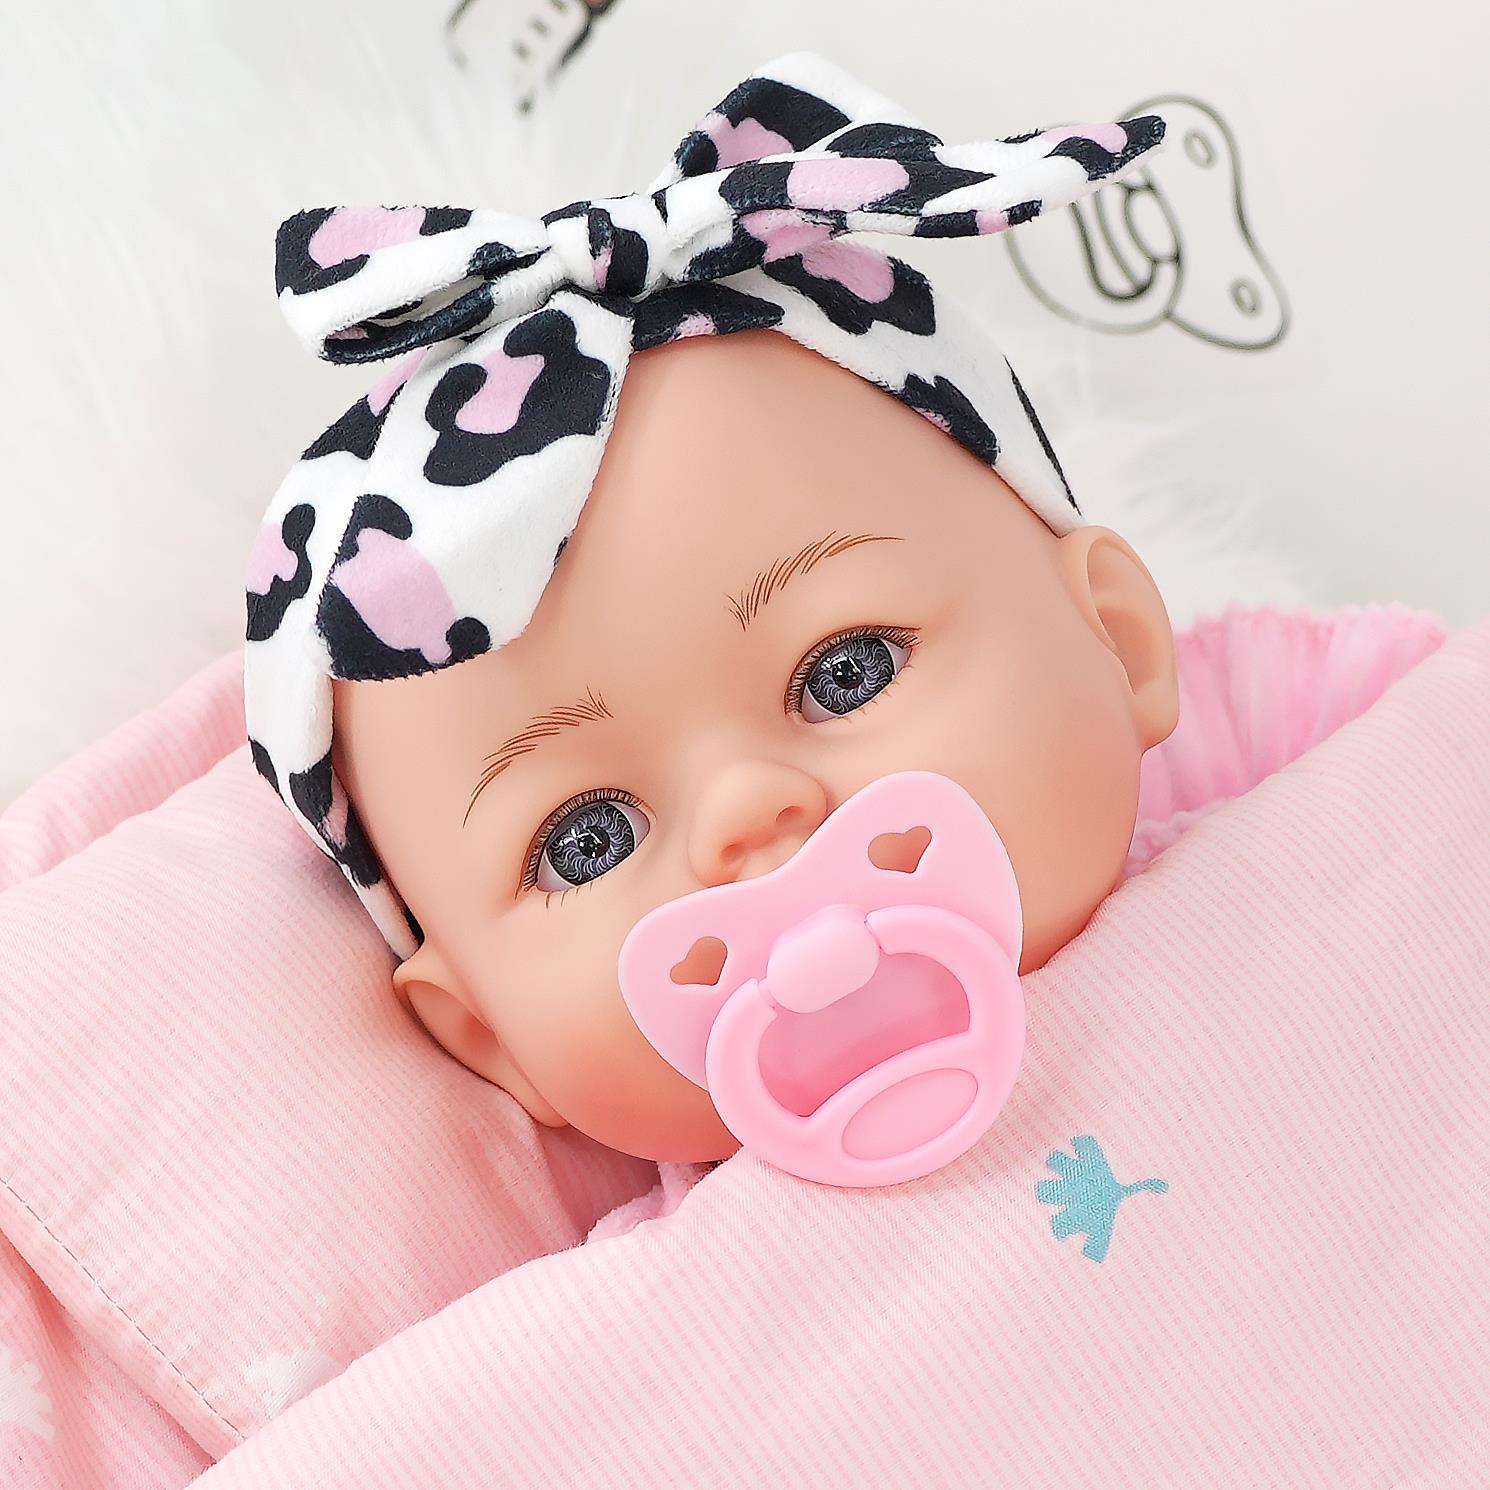 BiBi Baby Girl with Bonus Outfit (45 cm / 18") by BiBi Doll - UKBuyZone